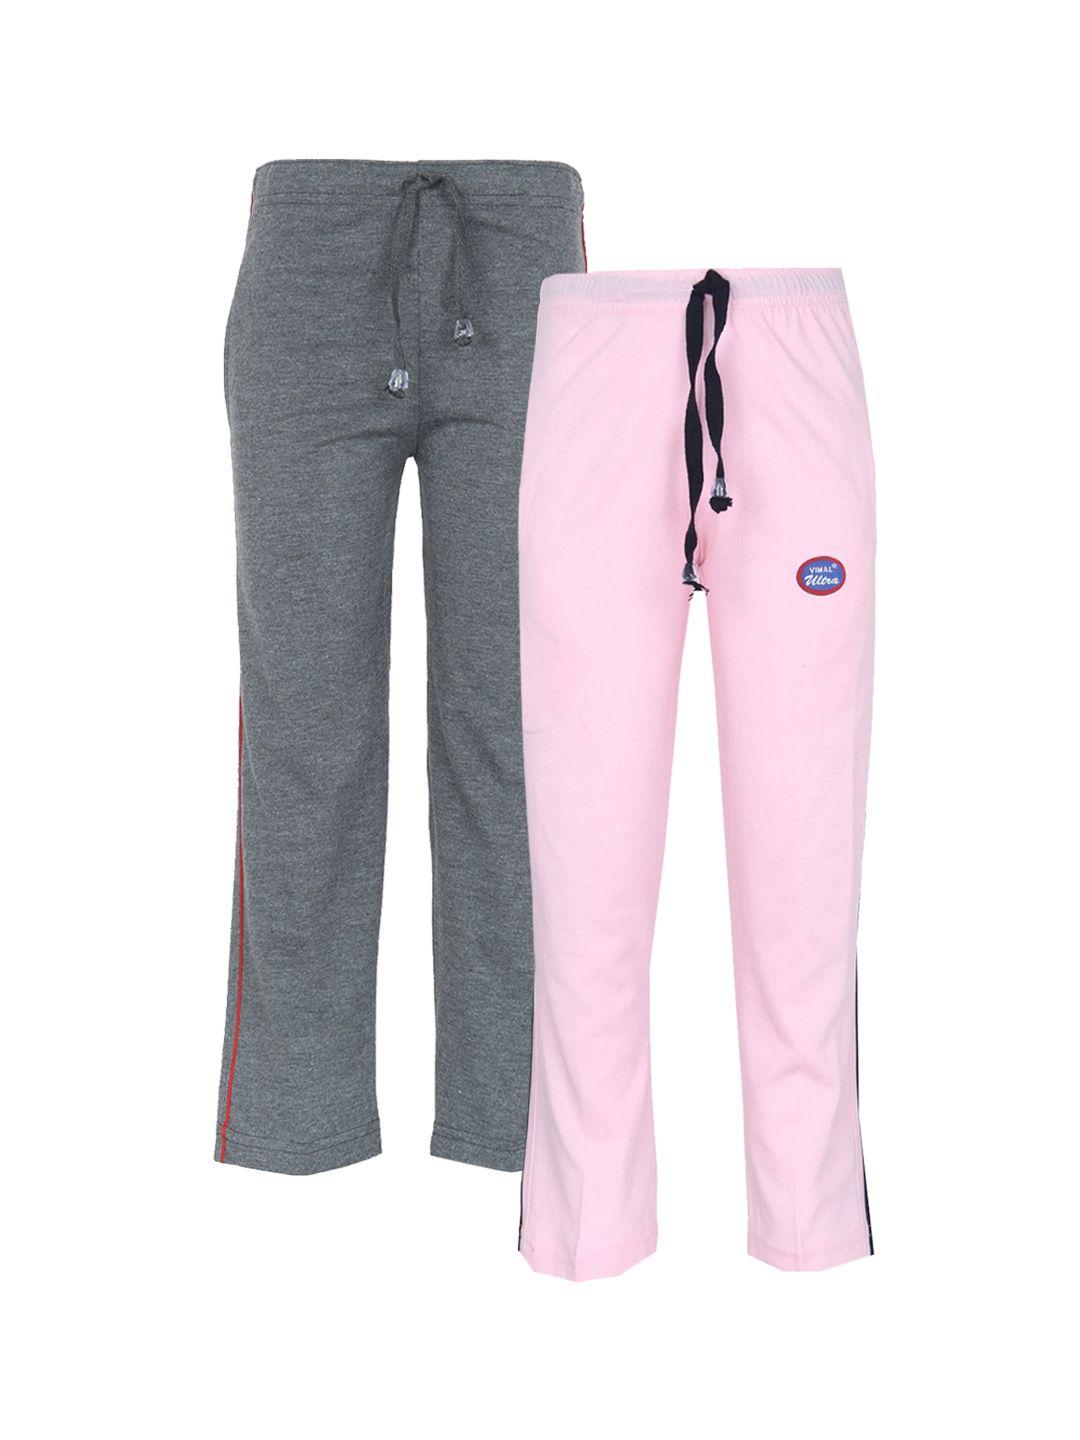 vimal jonney kids grey & pink pack of 2 solid track pants